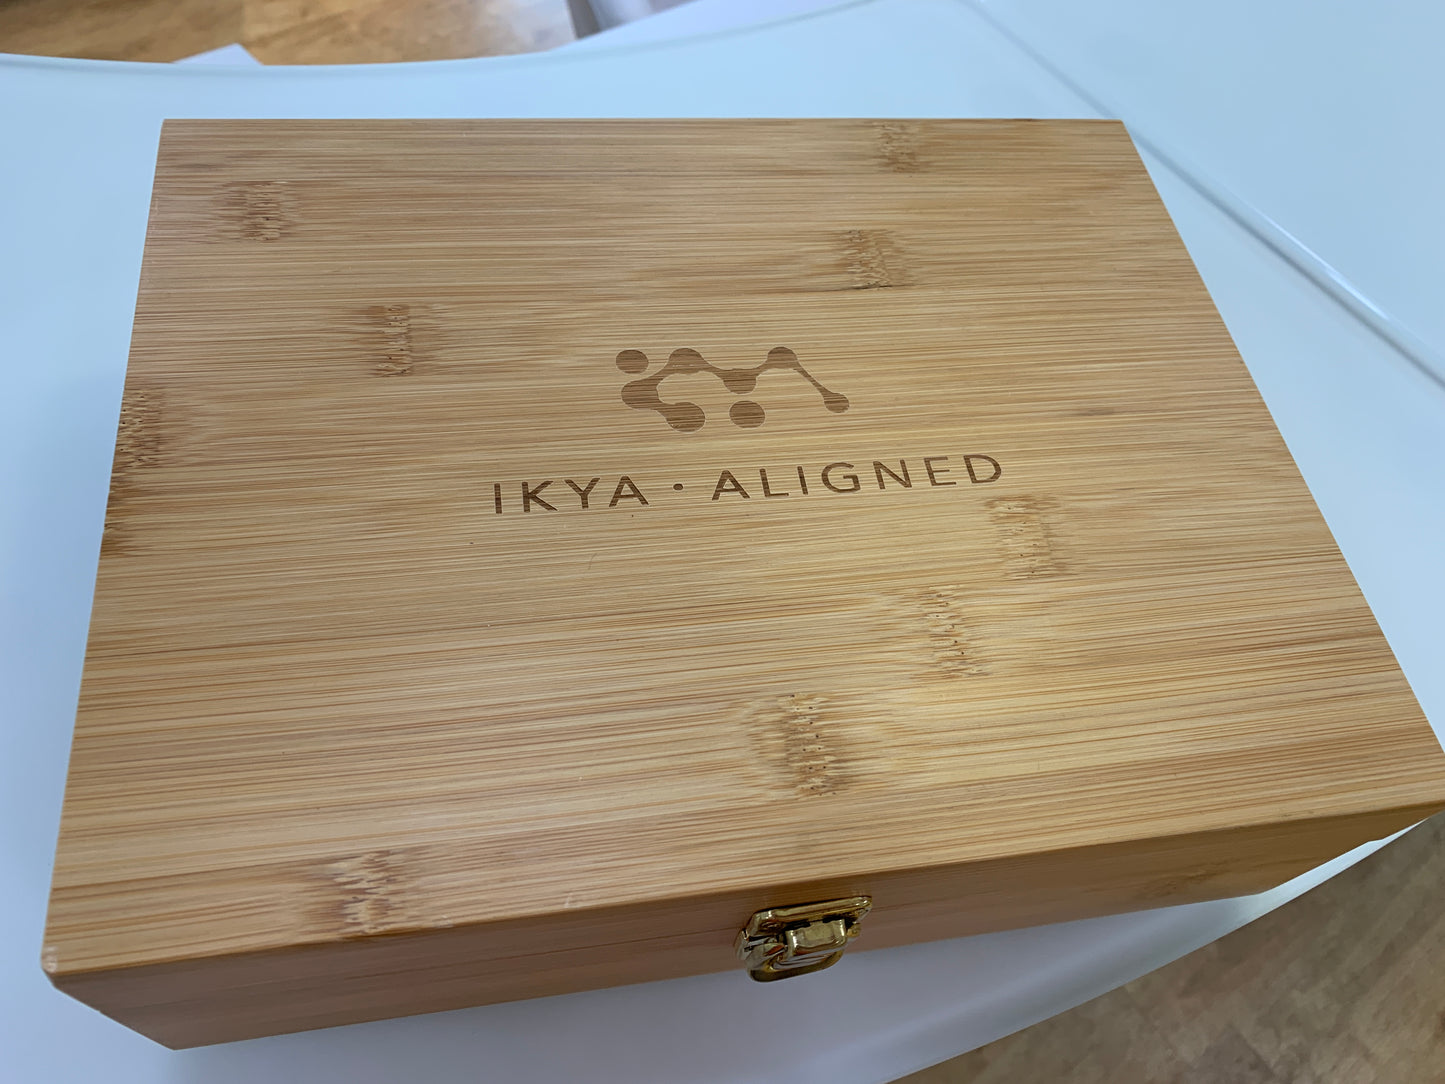 IKYA Aligned Crystal Healing custom box boks for gemstone spheres